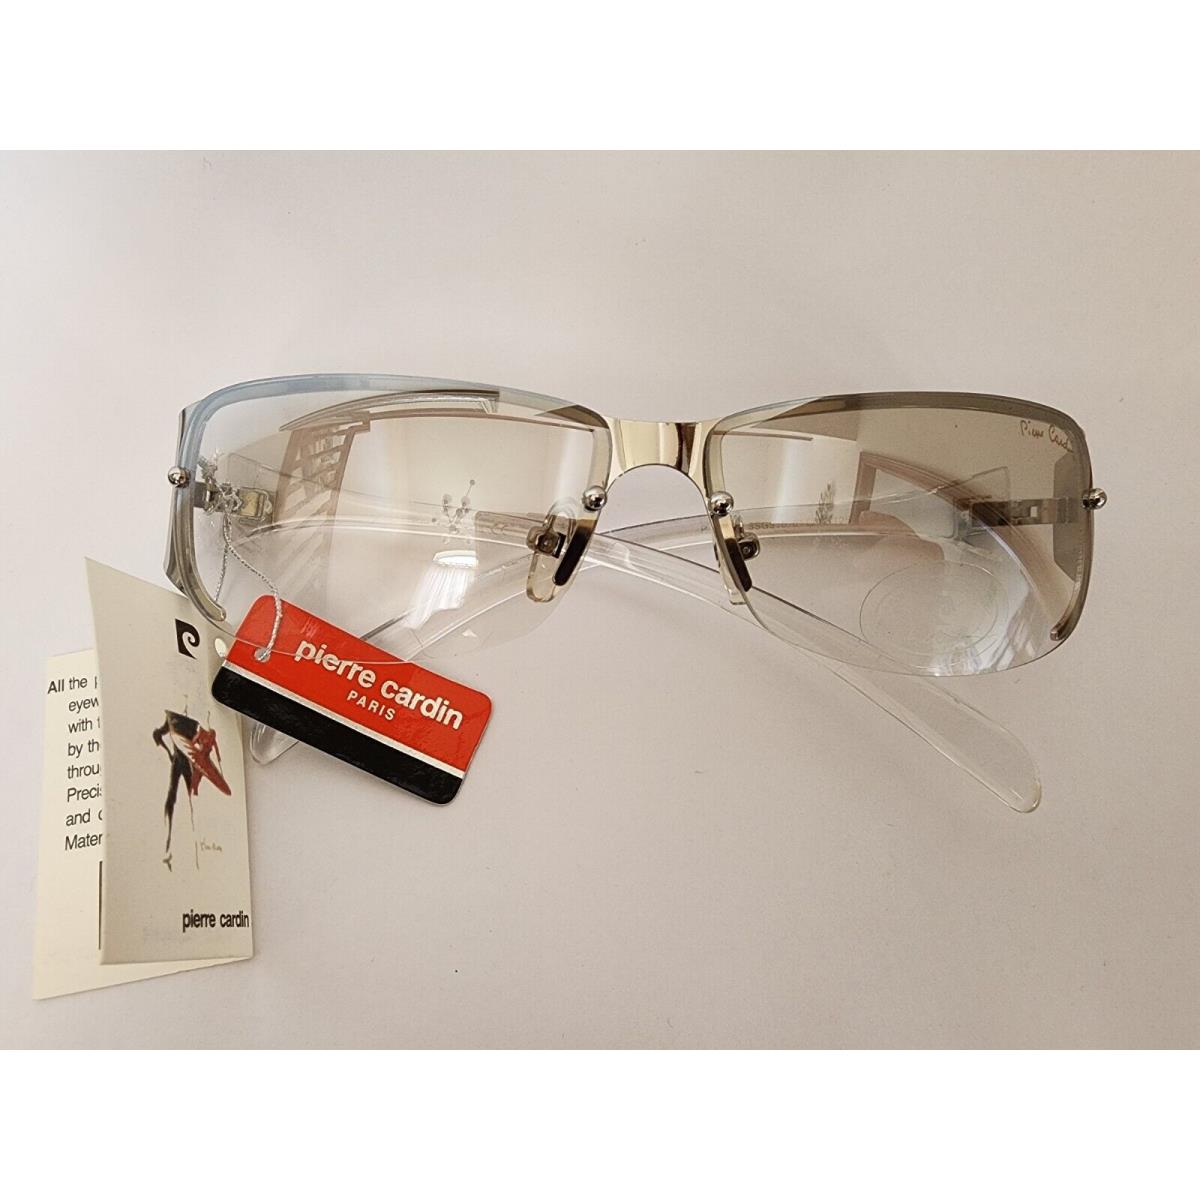 Pierre Cardin Paris Fashion Sunglasses Polycarbonate UV-400 Silver